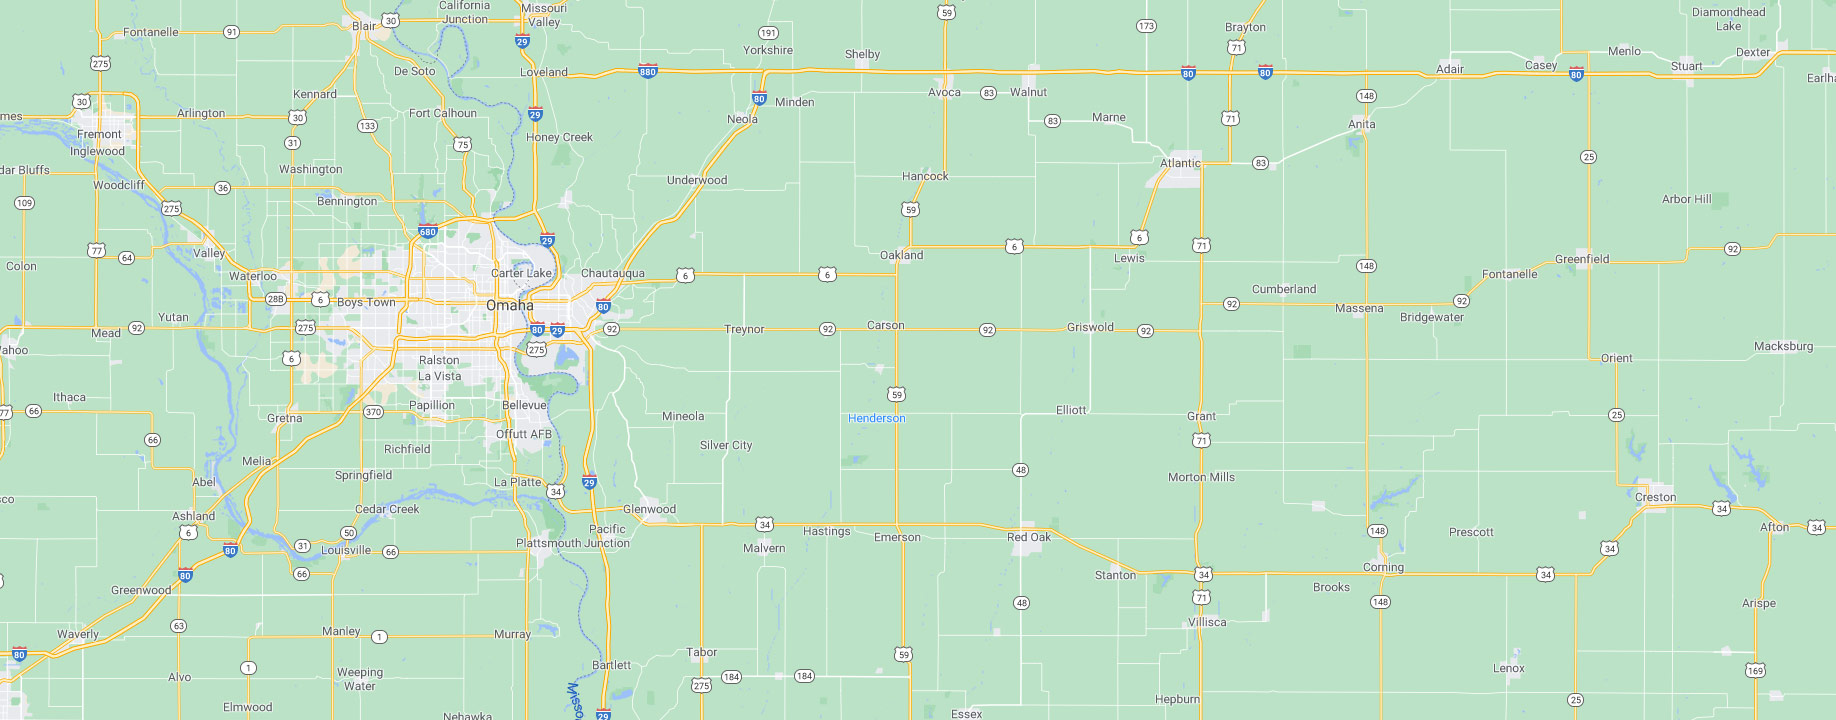 Groundscapes, Inc. service areas map background of Omaha, Nebraska.